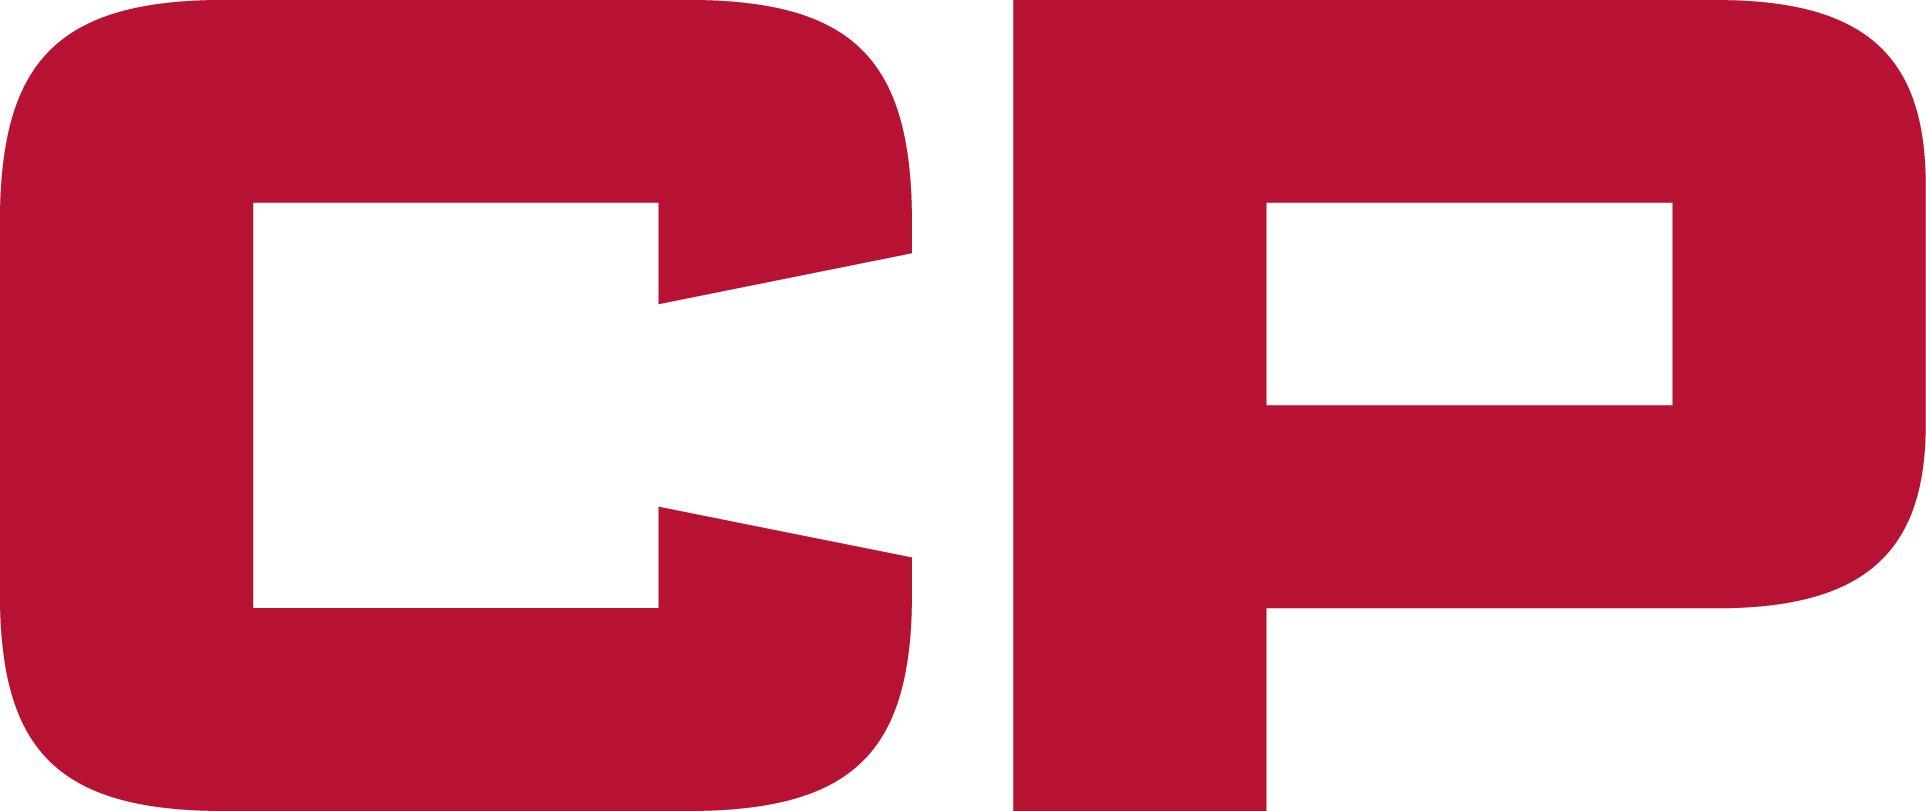 Rails Logo - Image - CP Logo RGB.jpg | Rails Of Union Pacific Wiki | FANDOM ...